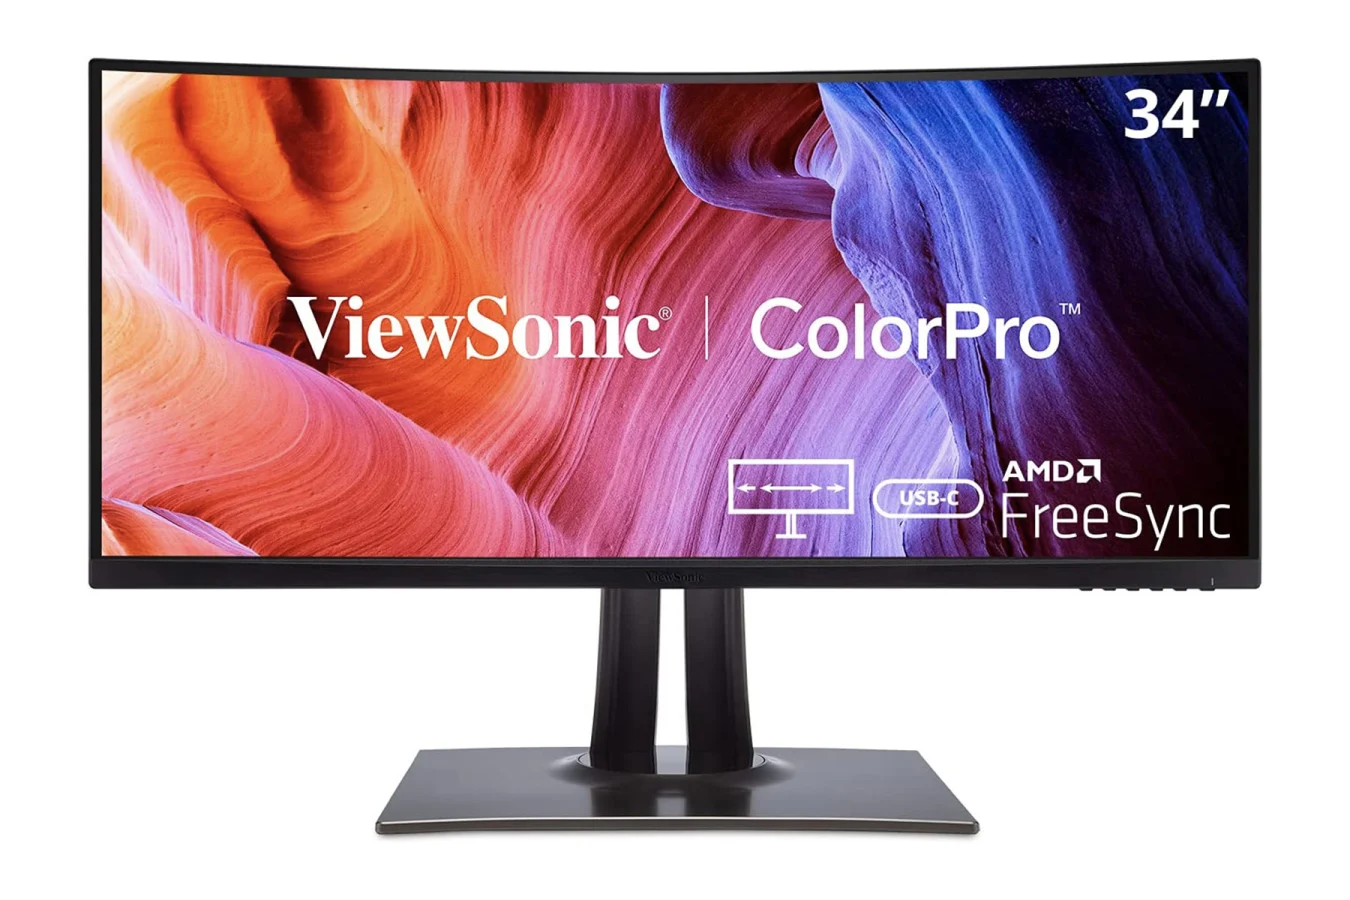 Viewsonic 34-inch Ultrawide ColorPro display